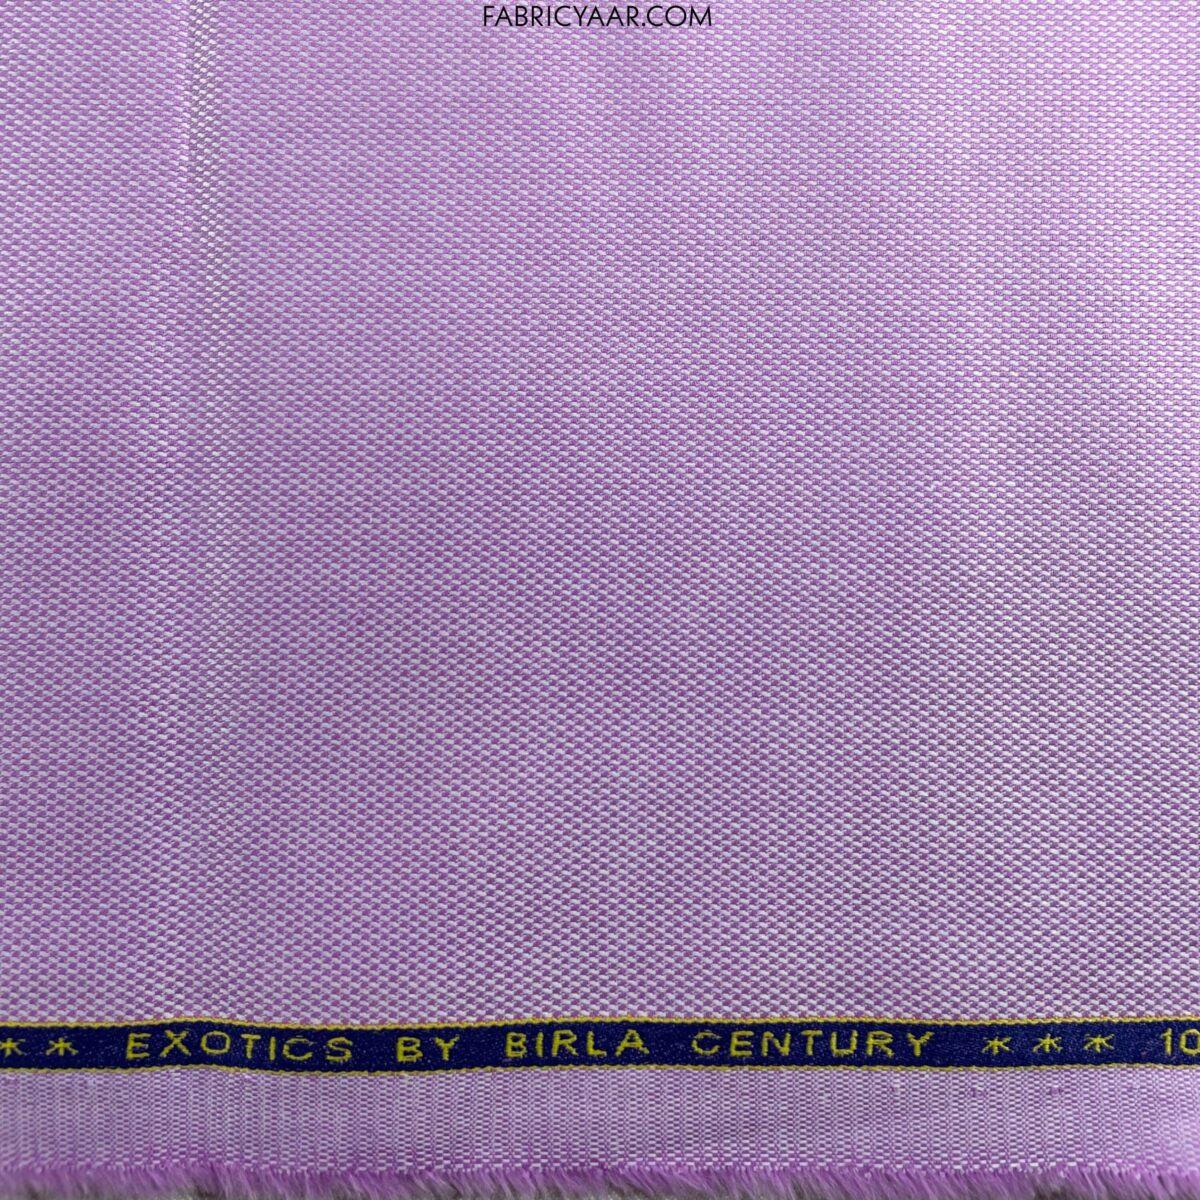 Birla Century Pure Cotton Self Textured Purple Shirt Fabric